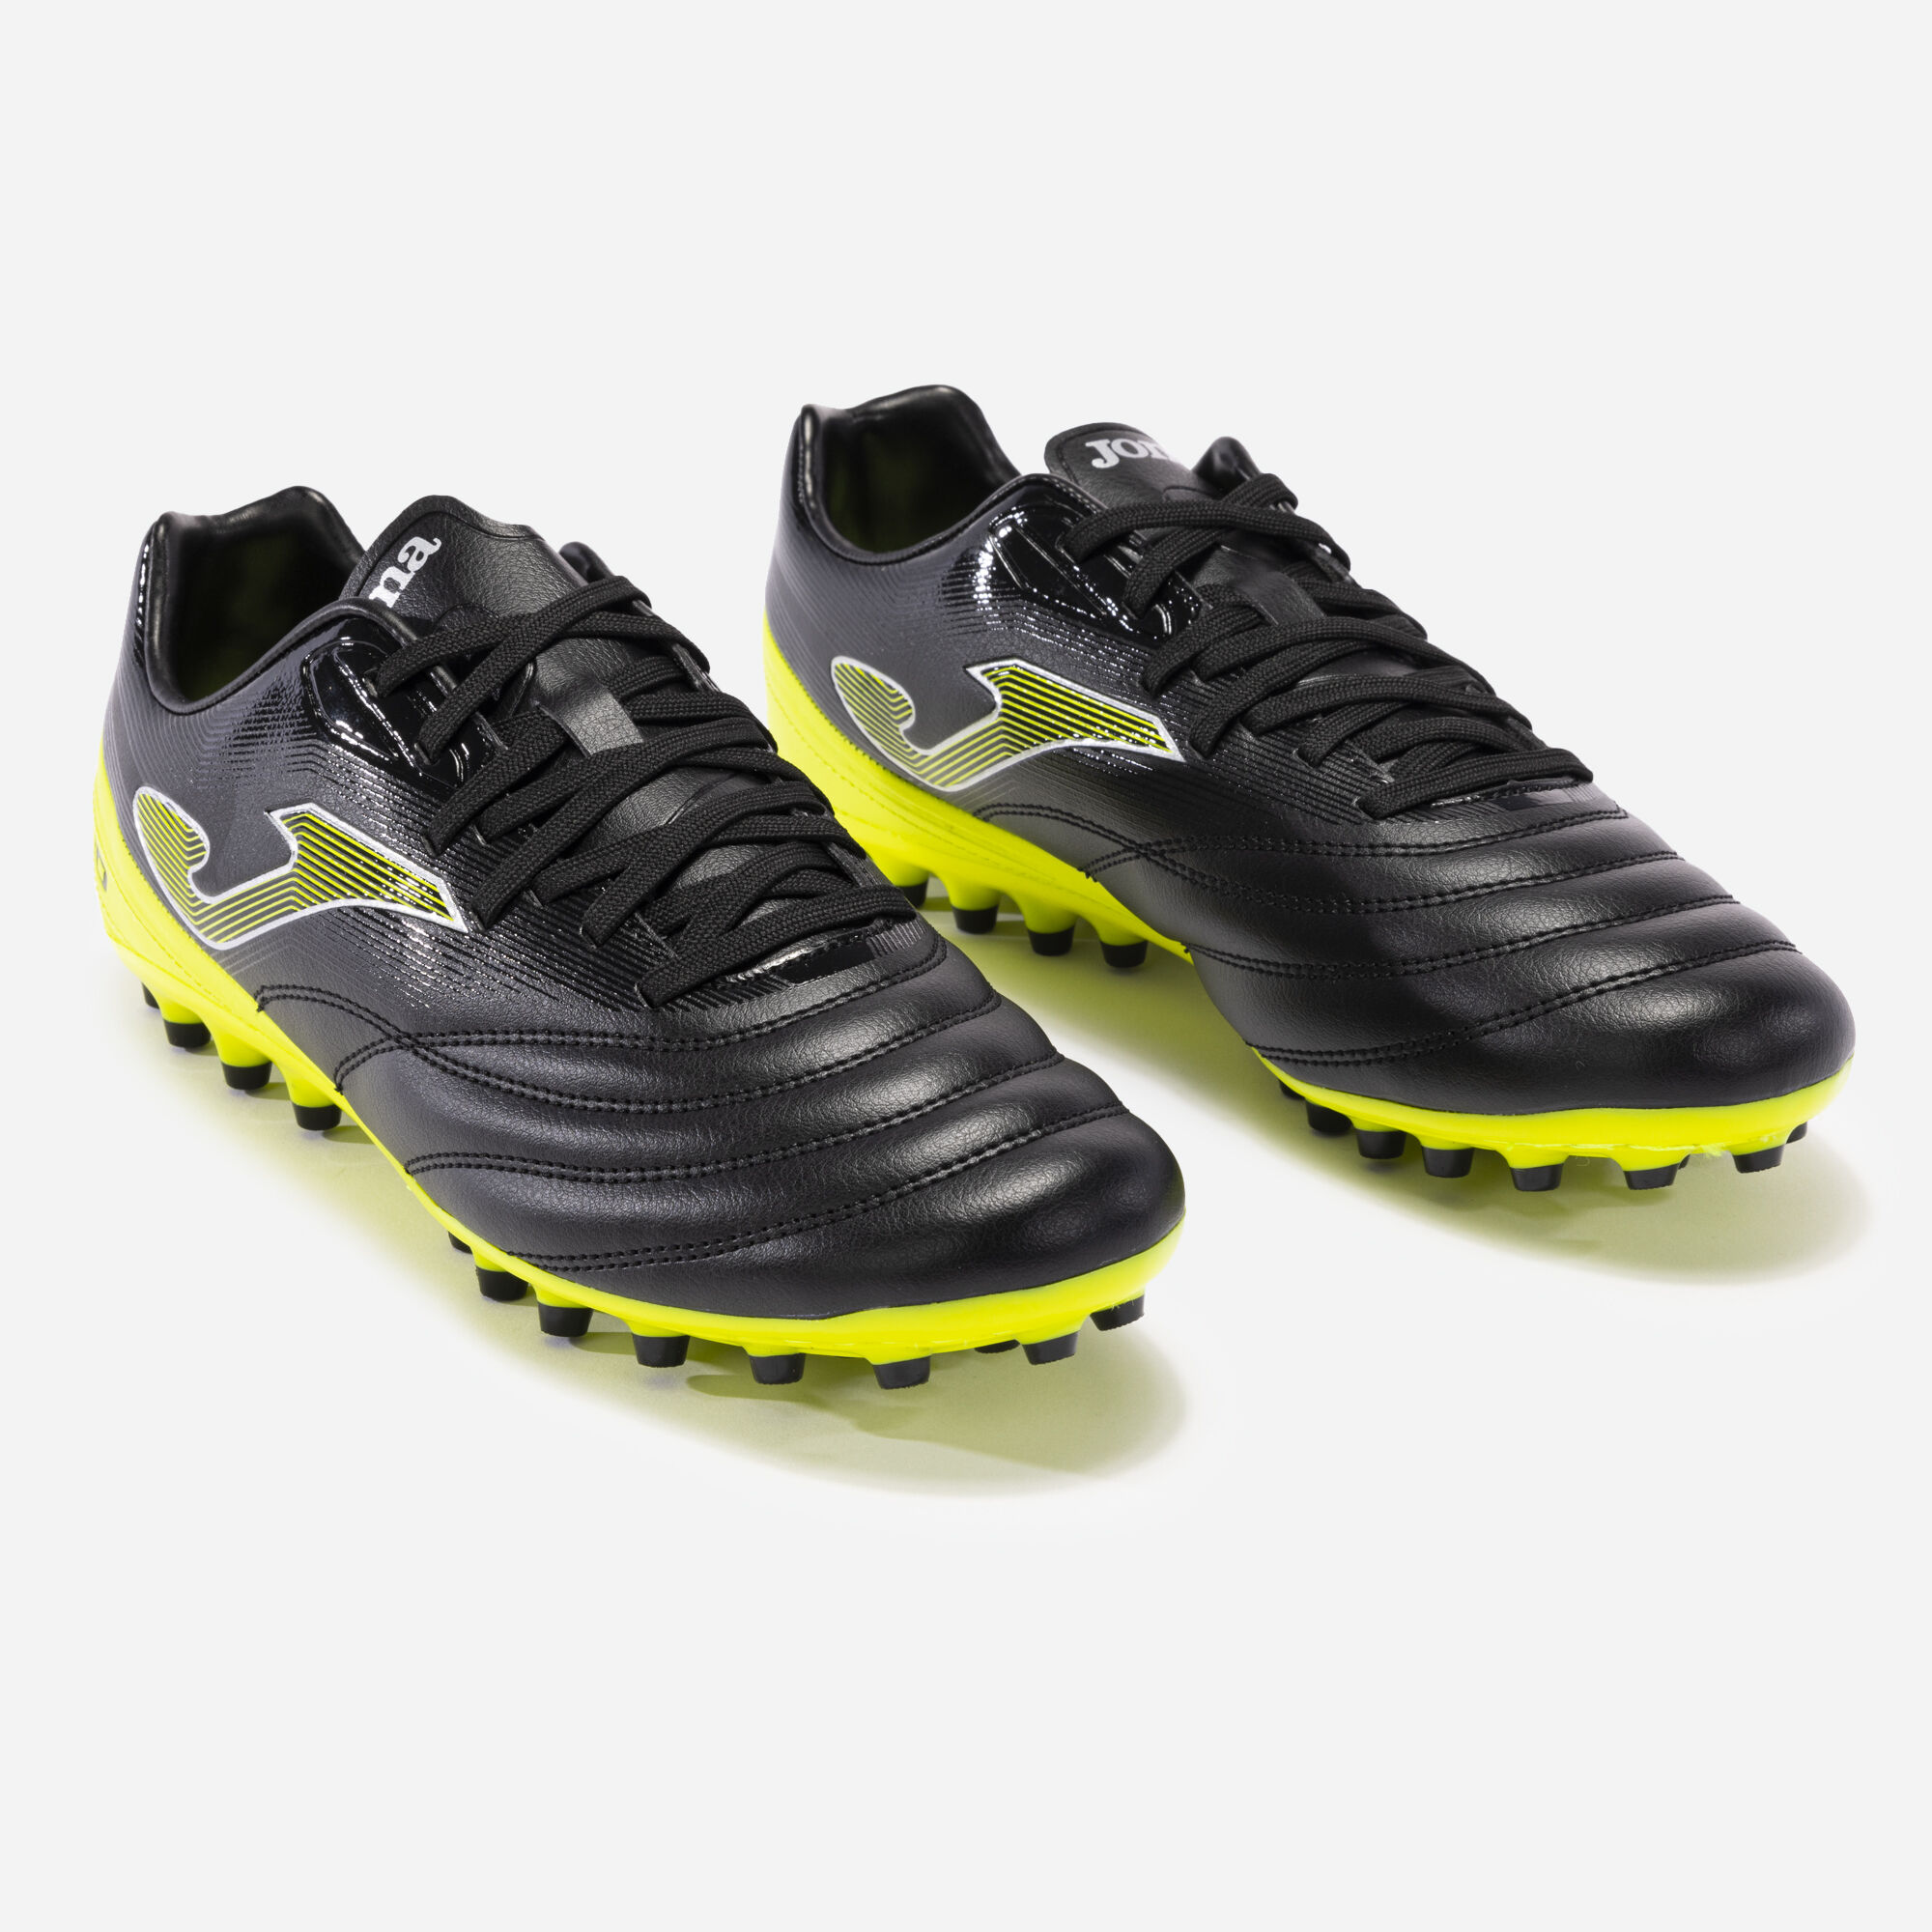 Chaussures football Numero-10 23 gazon synthétique AG noir jaune fluo